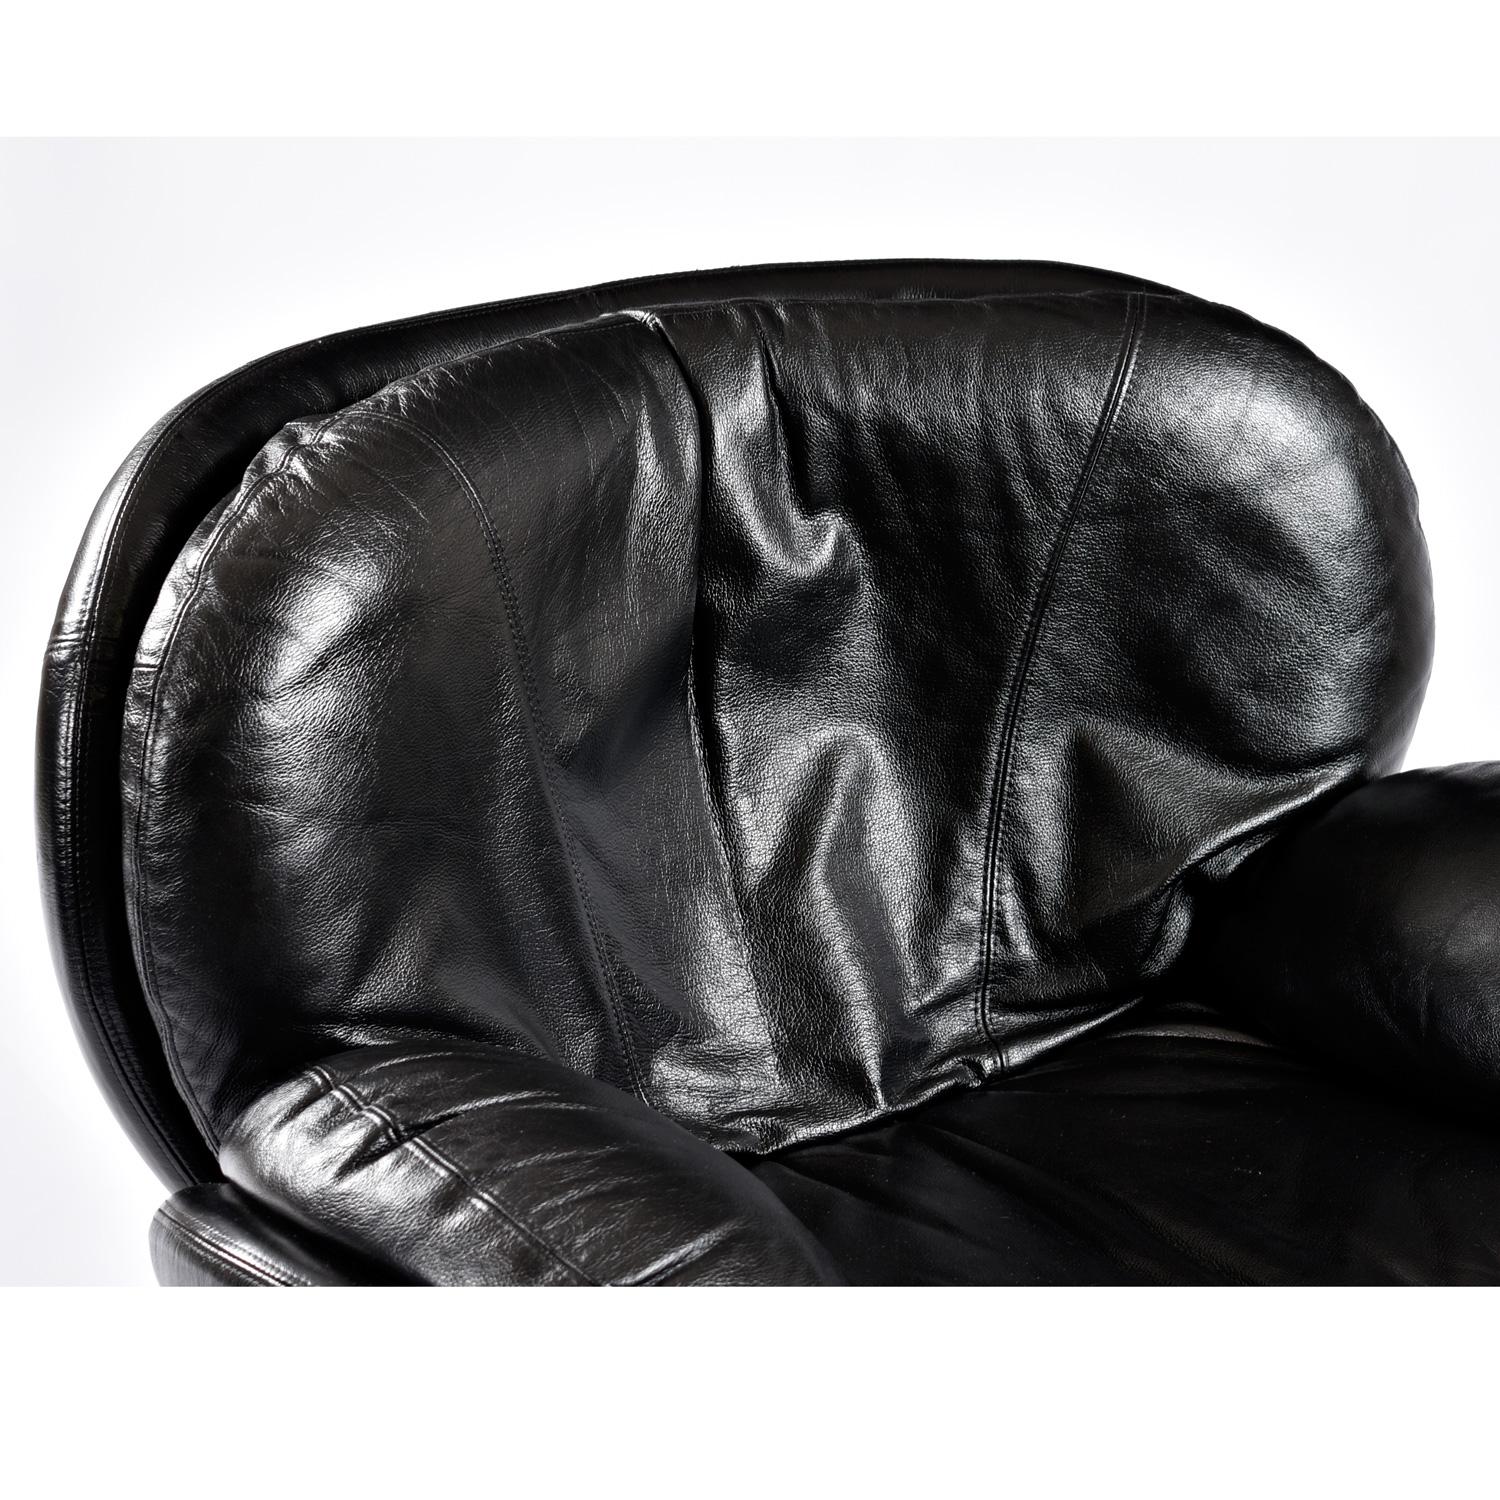  The Modernity Pedestal Base Black Leather Swivel Pod Chairs by Jaymar of Canada (en anglais seulement) en vente 2